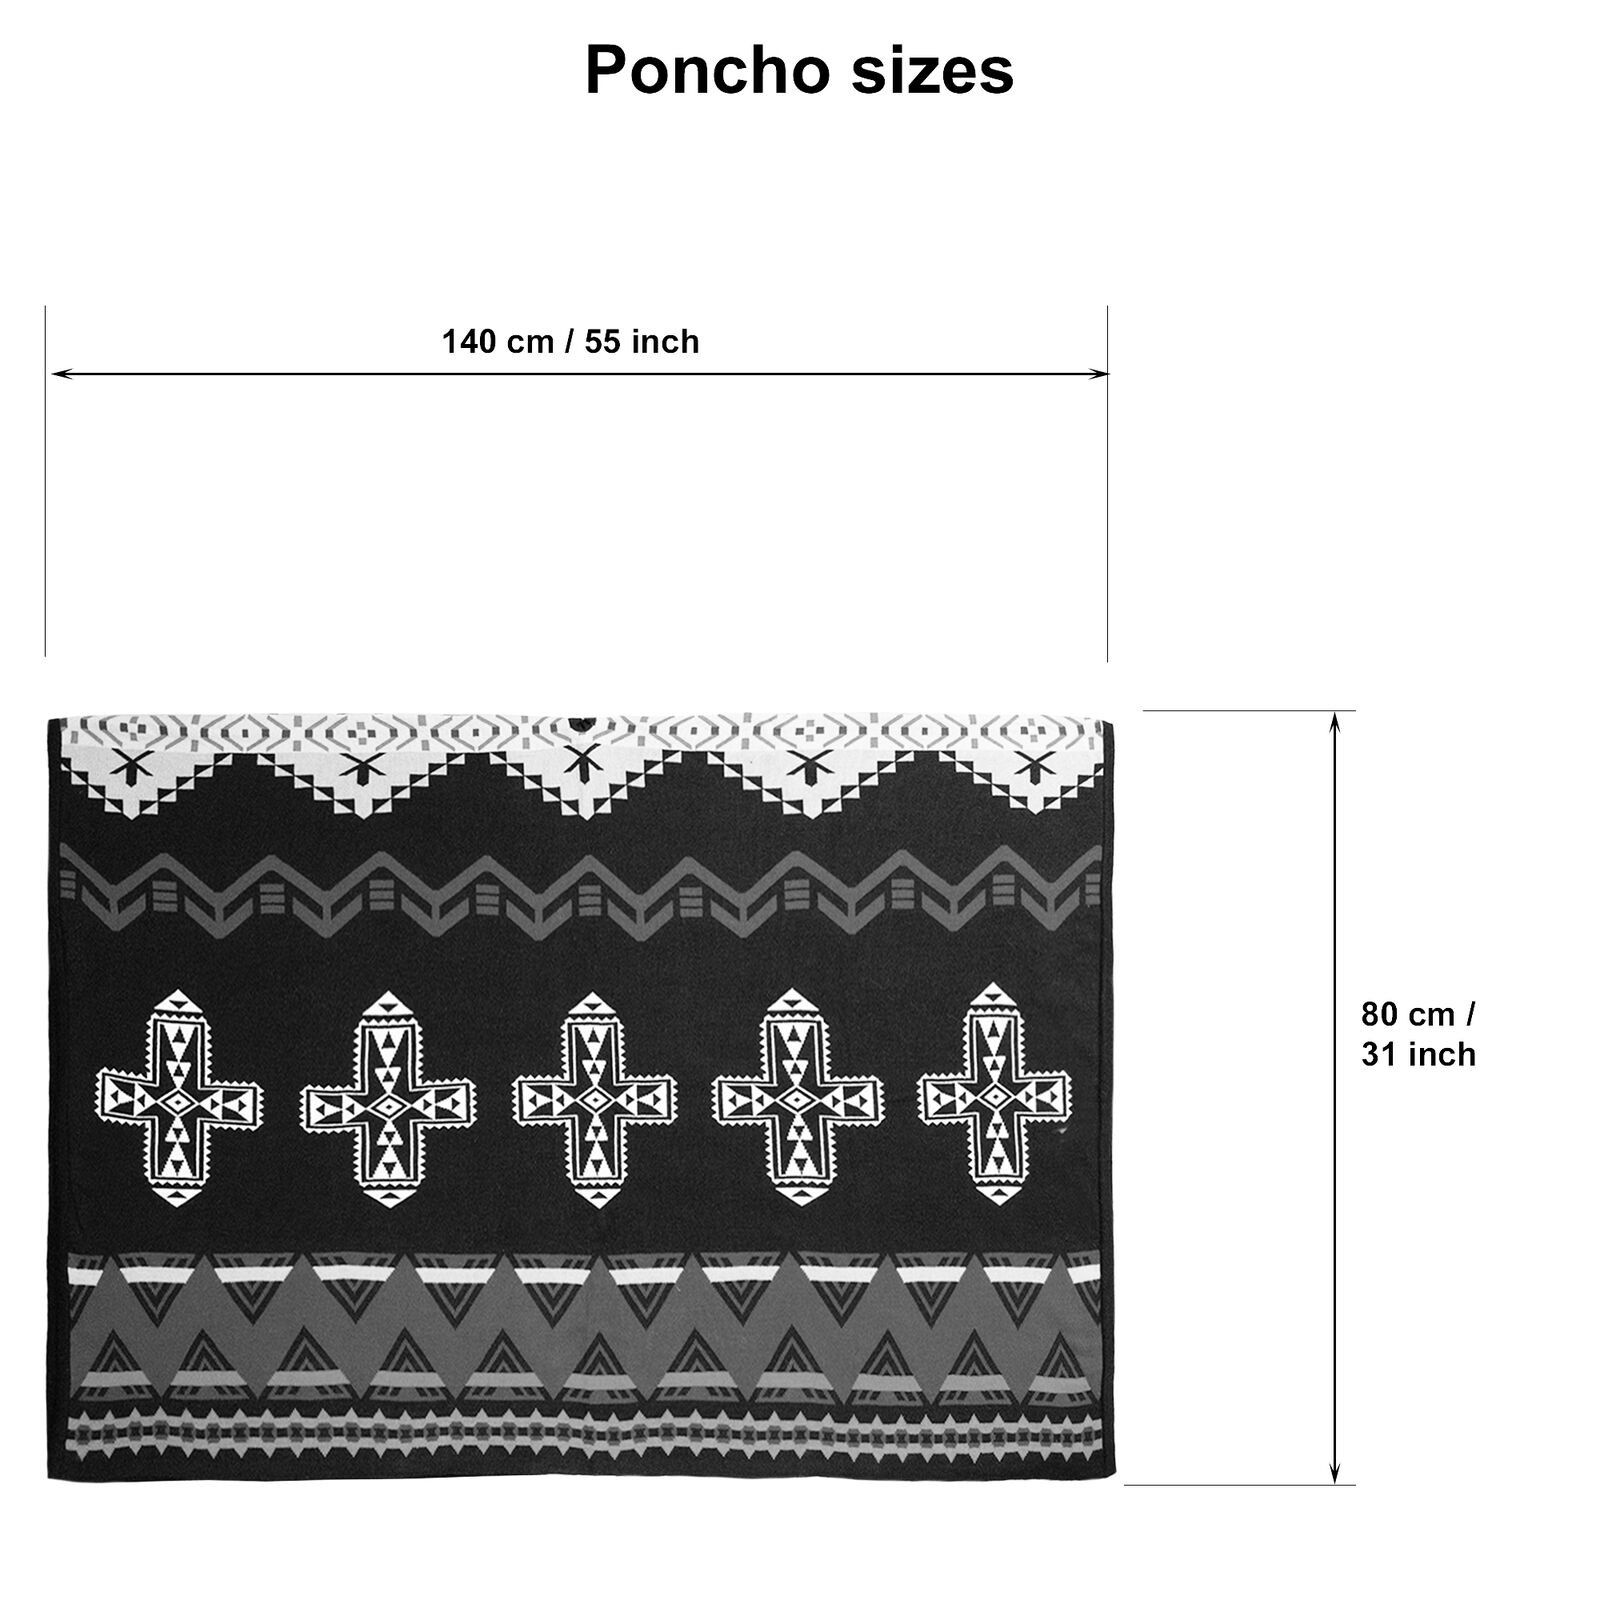 Shiripuno - Harmony of Contrasts Reversible Alpaca-Cotton Poncho - Aztec Geometric Accents